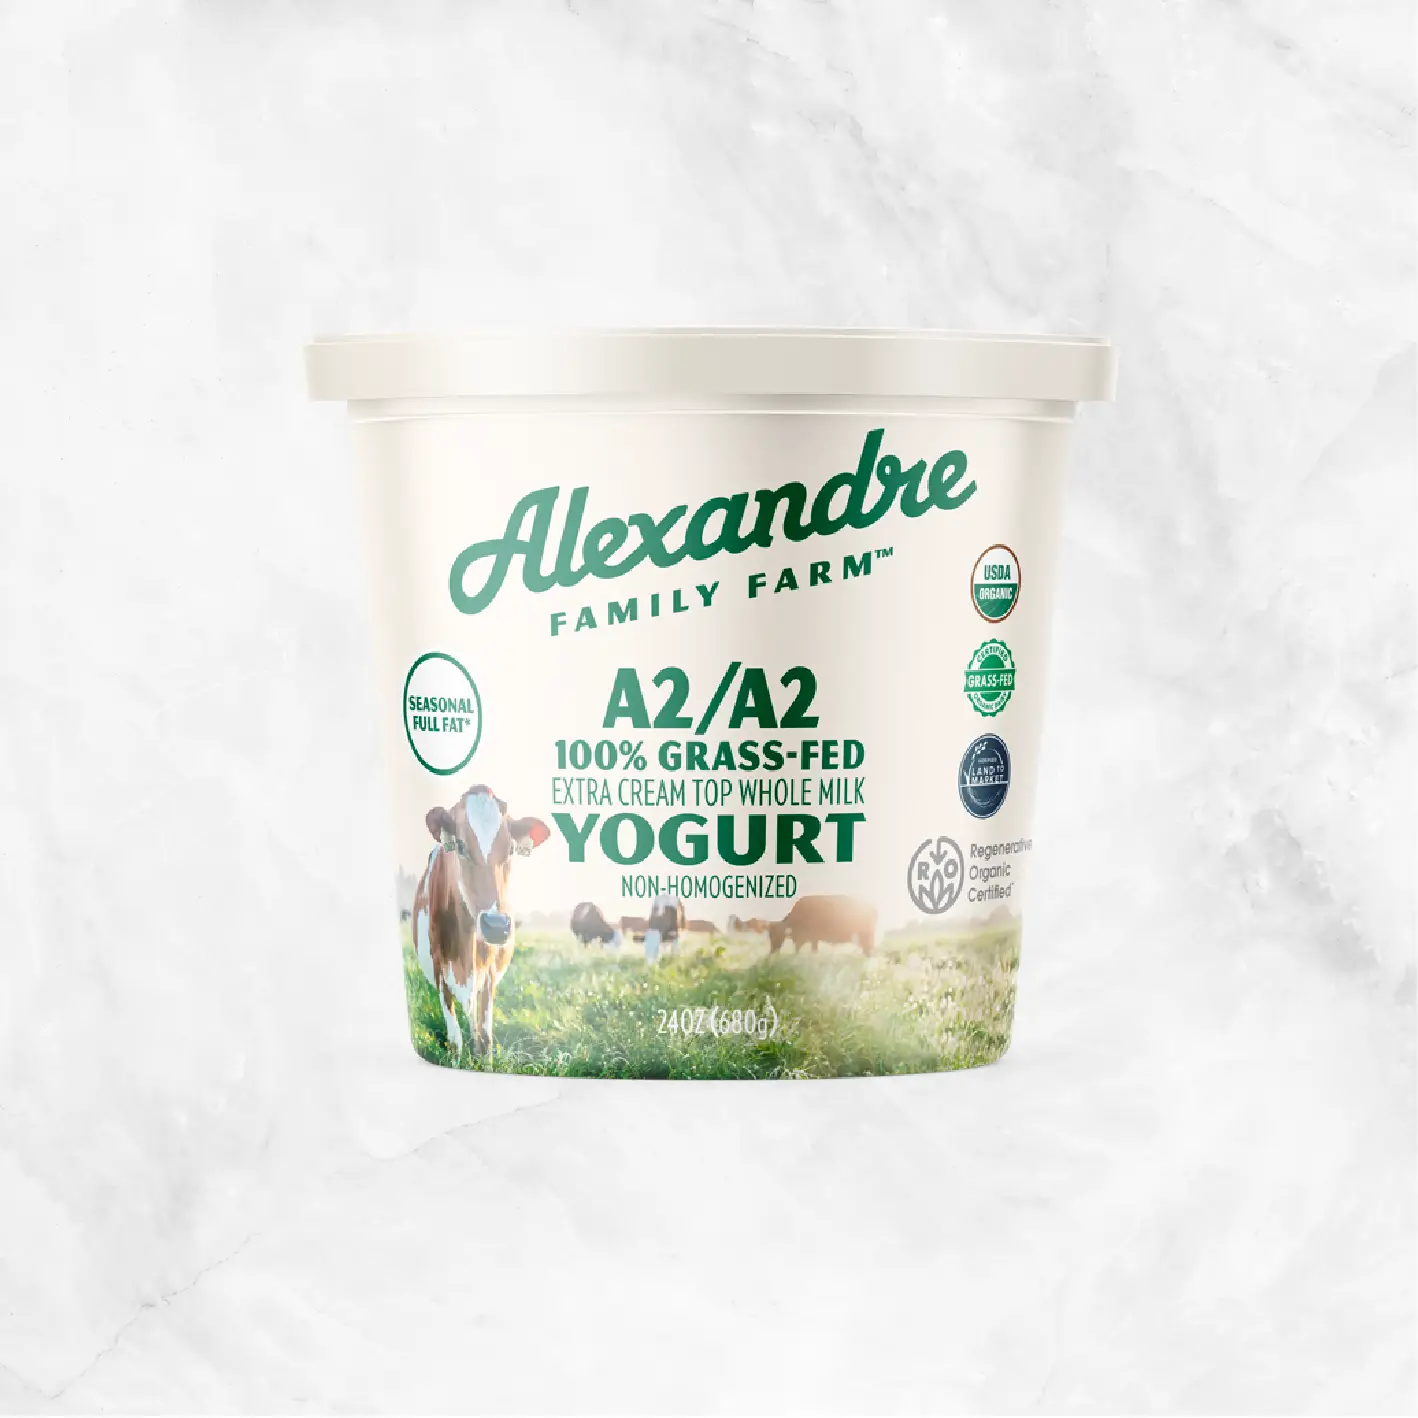 Organic Grass-Fed A2/A2 Cream on Top Yogurt